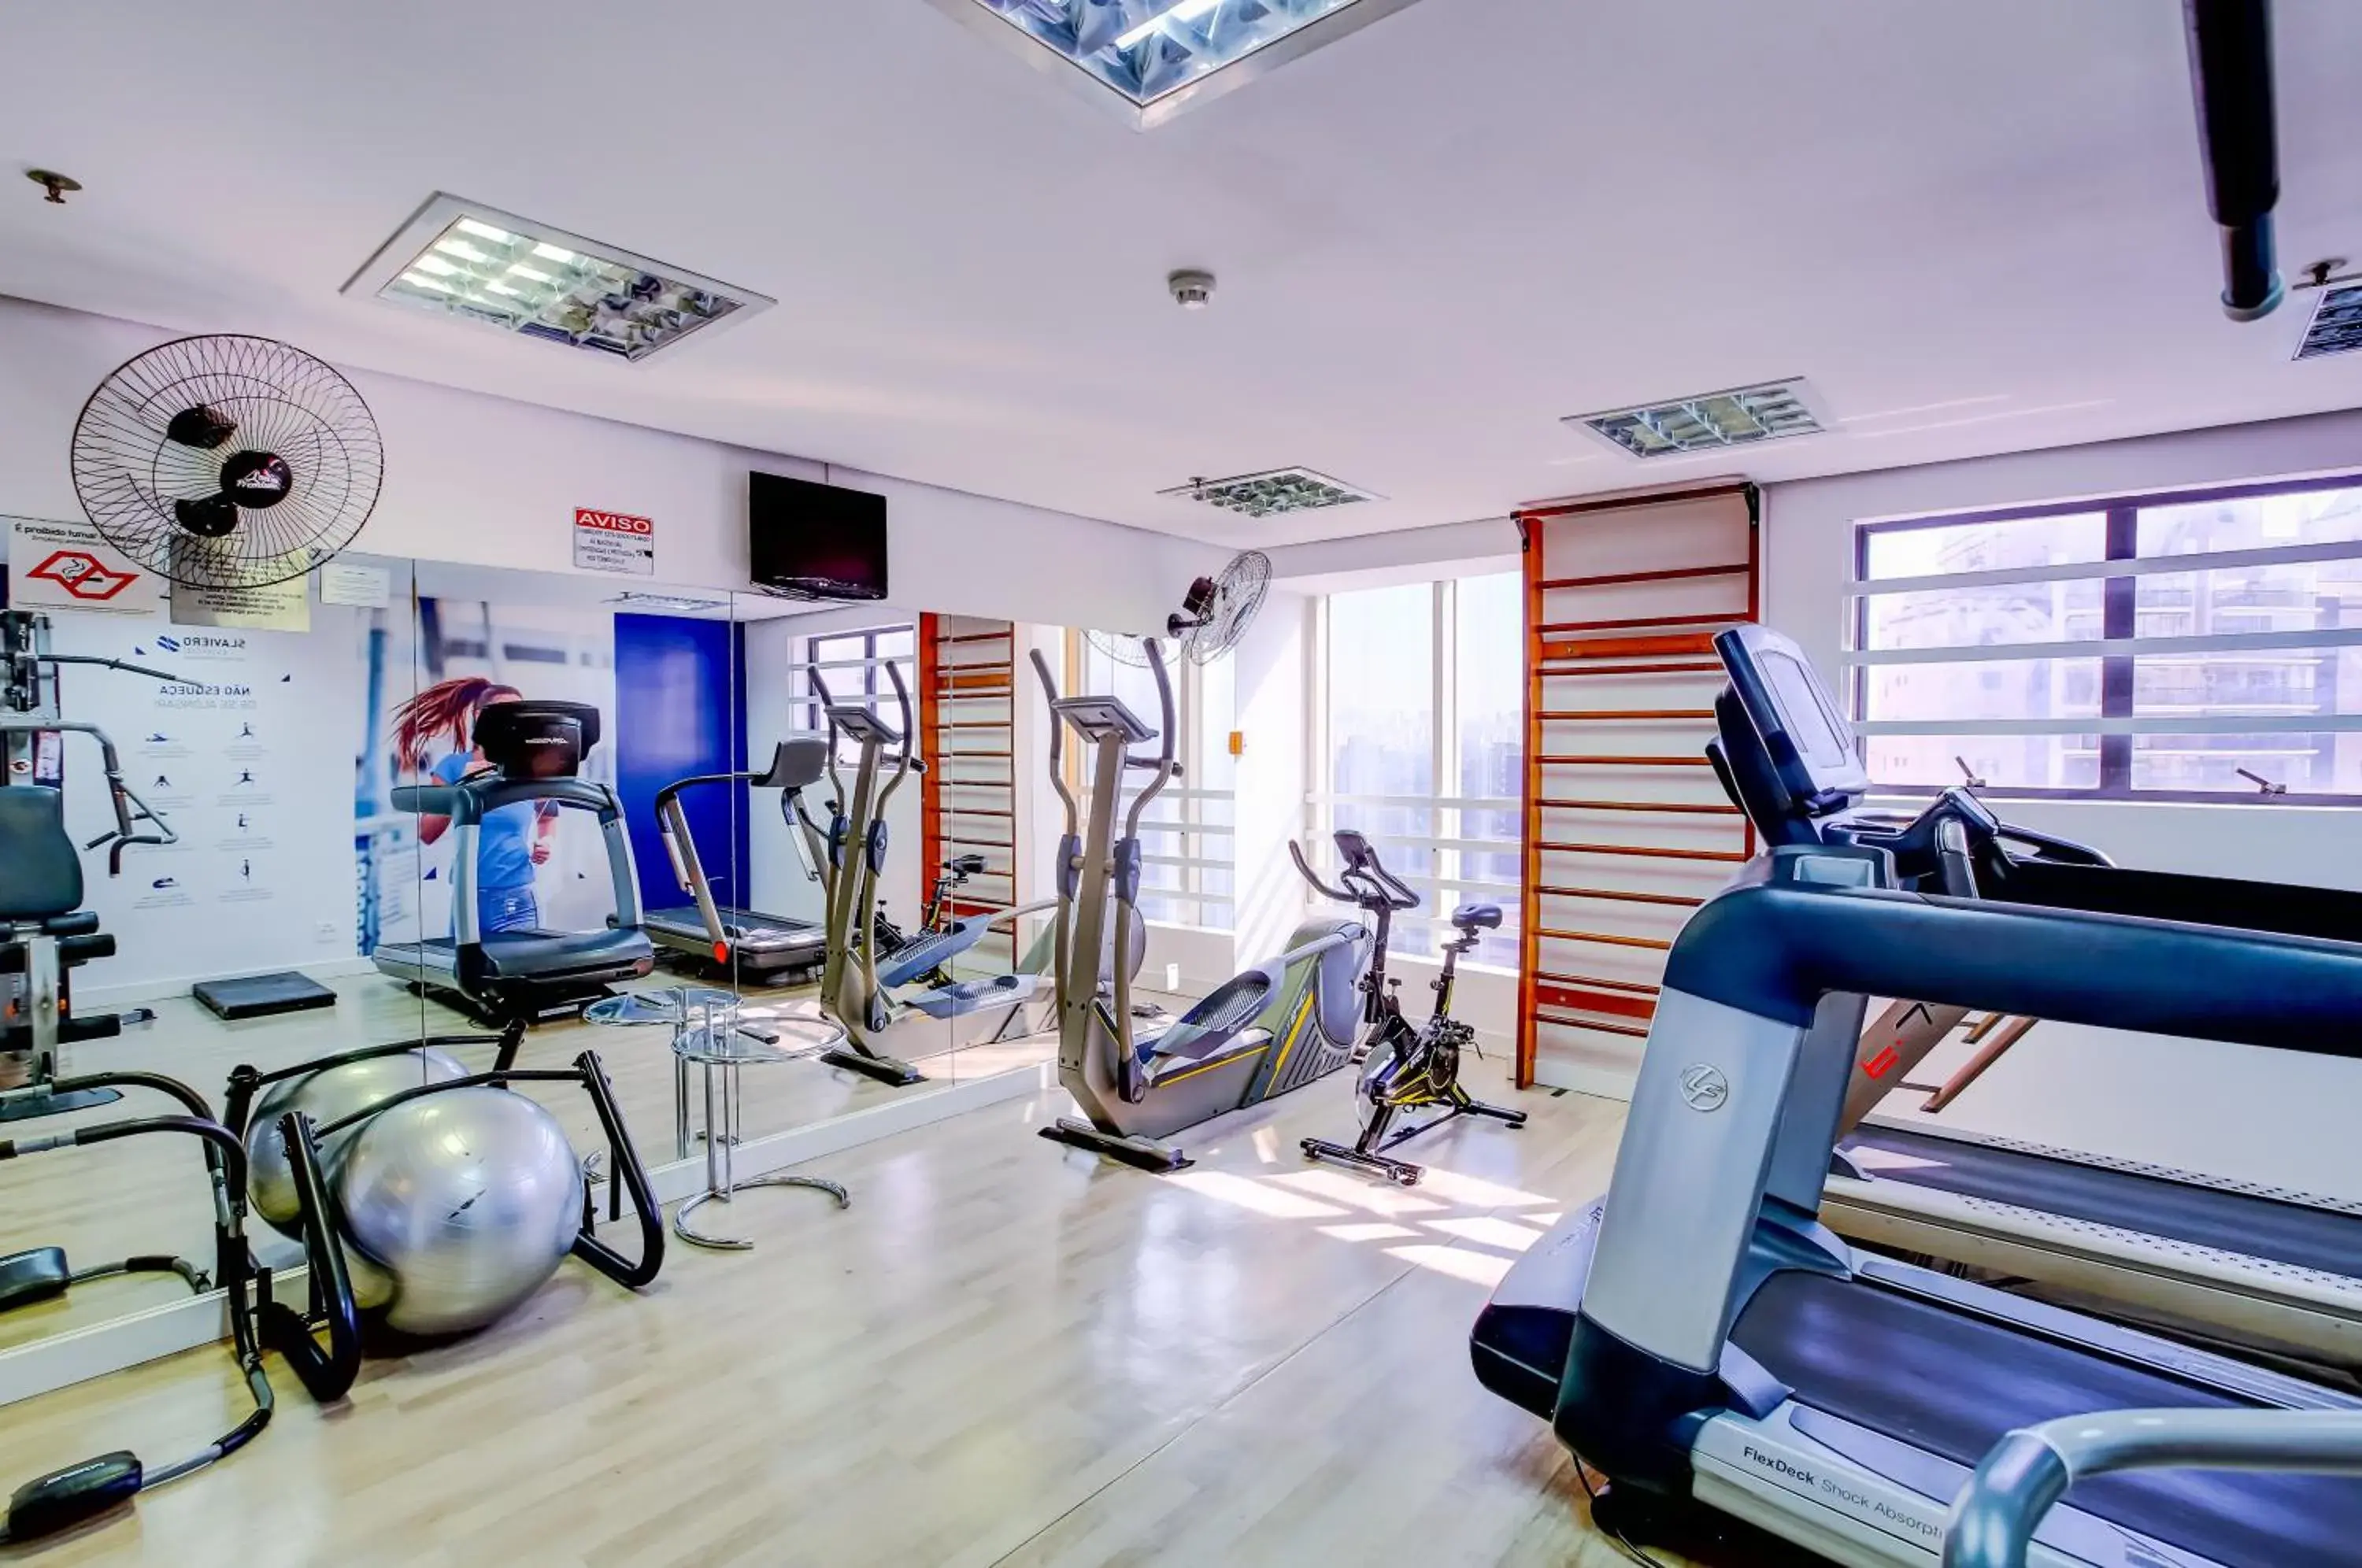 Fitness centre/facilities, Fitness Center/Facilities in Slaviero São Paulo Ibirapuera